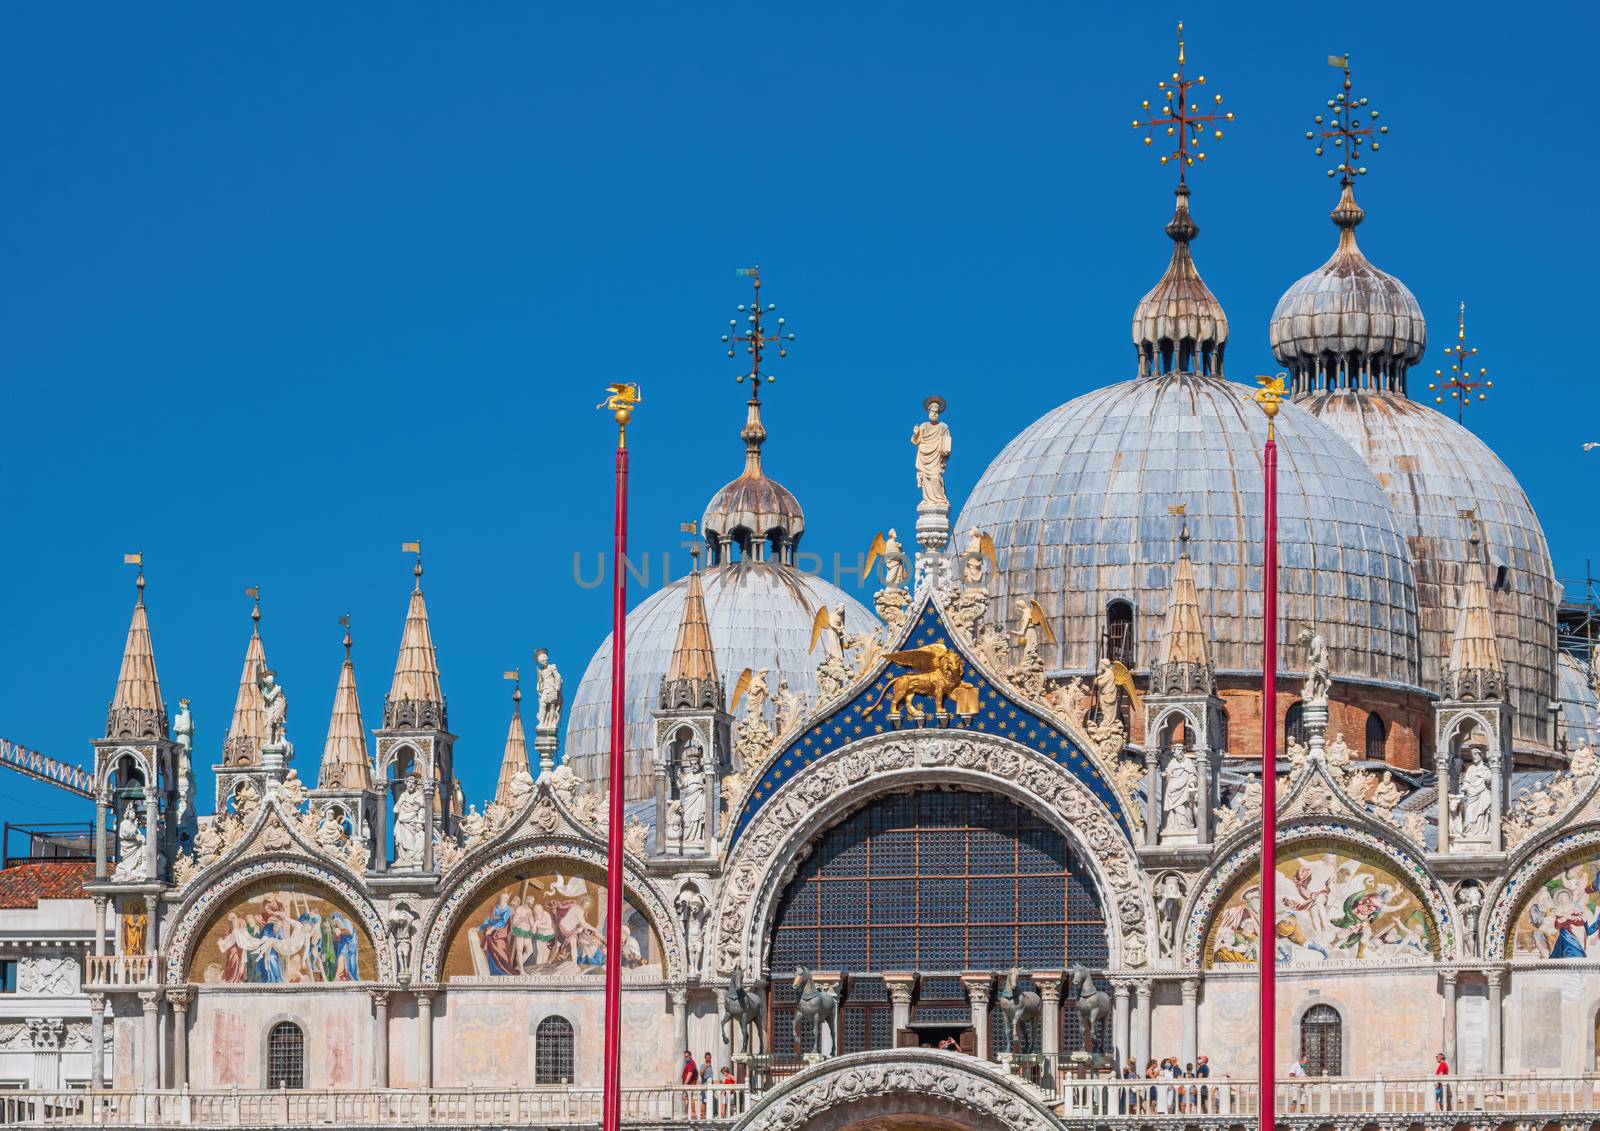 Facade of Saint Mark's Basilica in Venice. Renaissance art of old Venice.